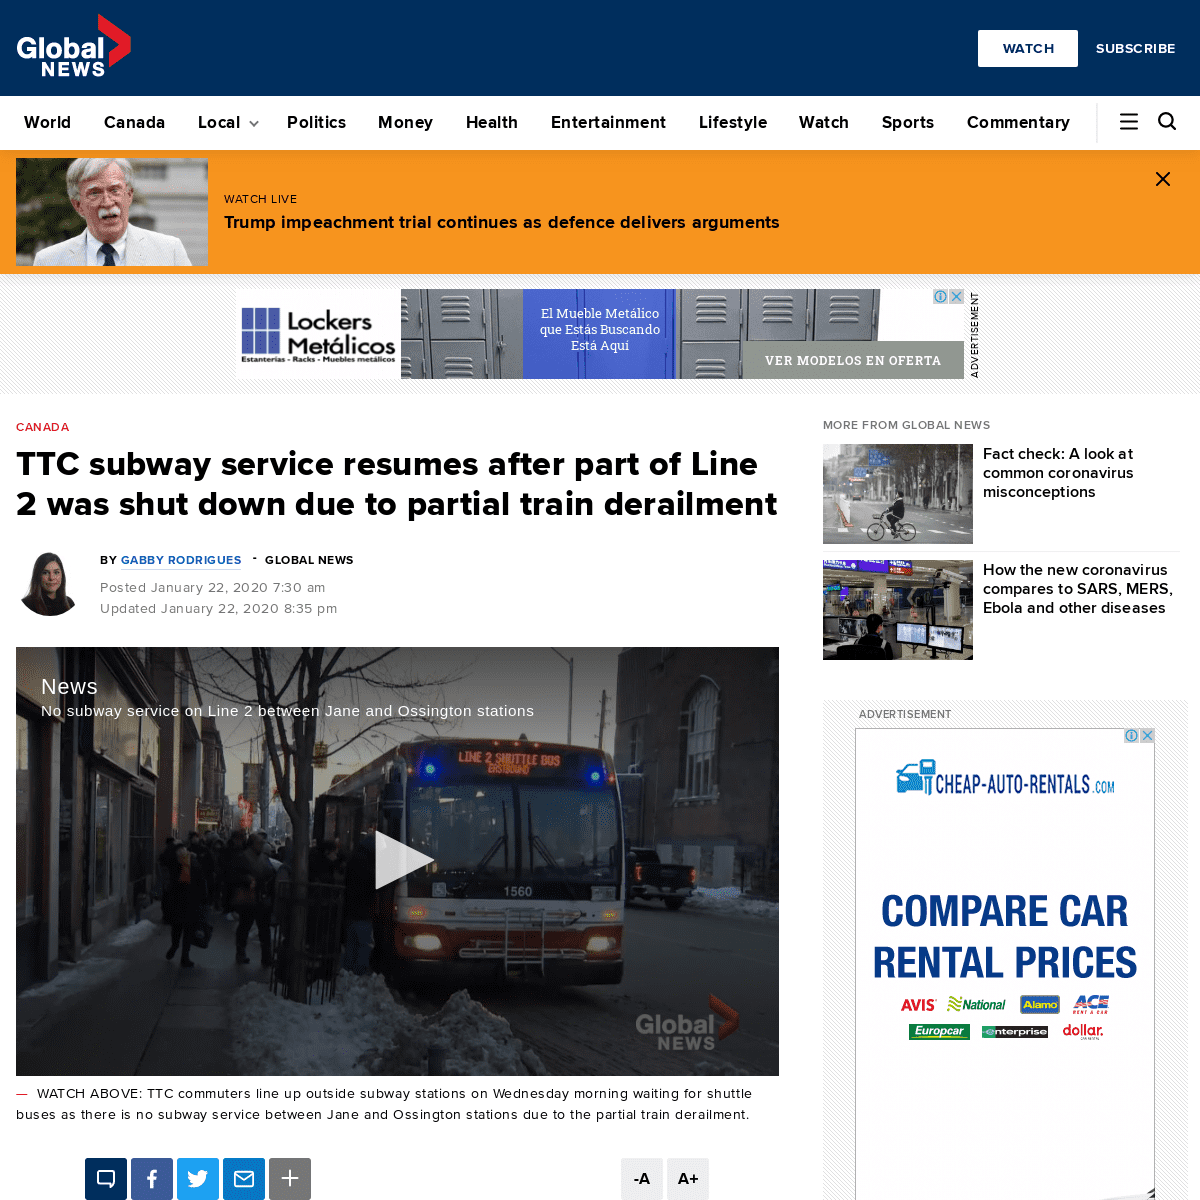 A complete backup of globalnews.ca/news/6445336/no-subway-service-line-2-jane-ossignton-stations/